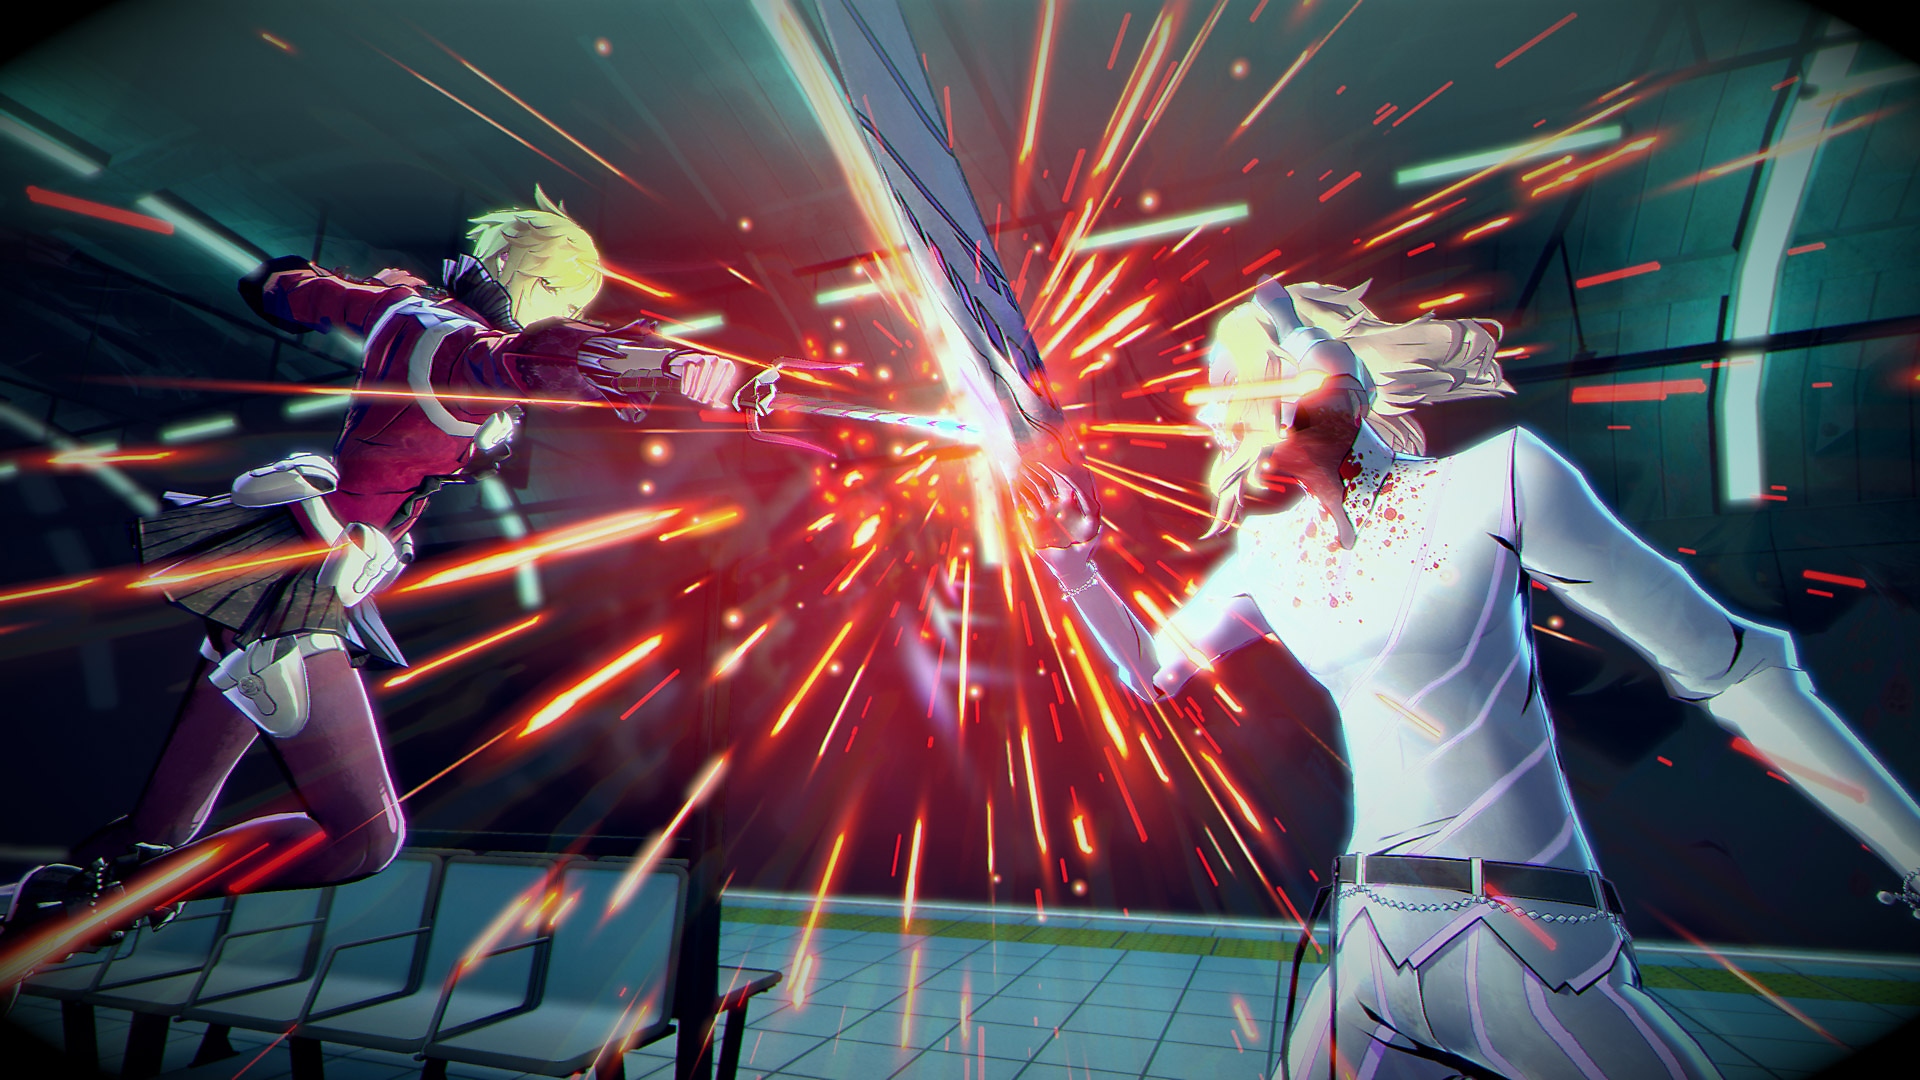 Soul Hackers 2 screenshot showing combat between two characters